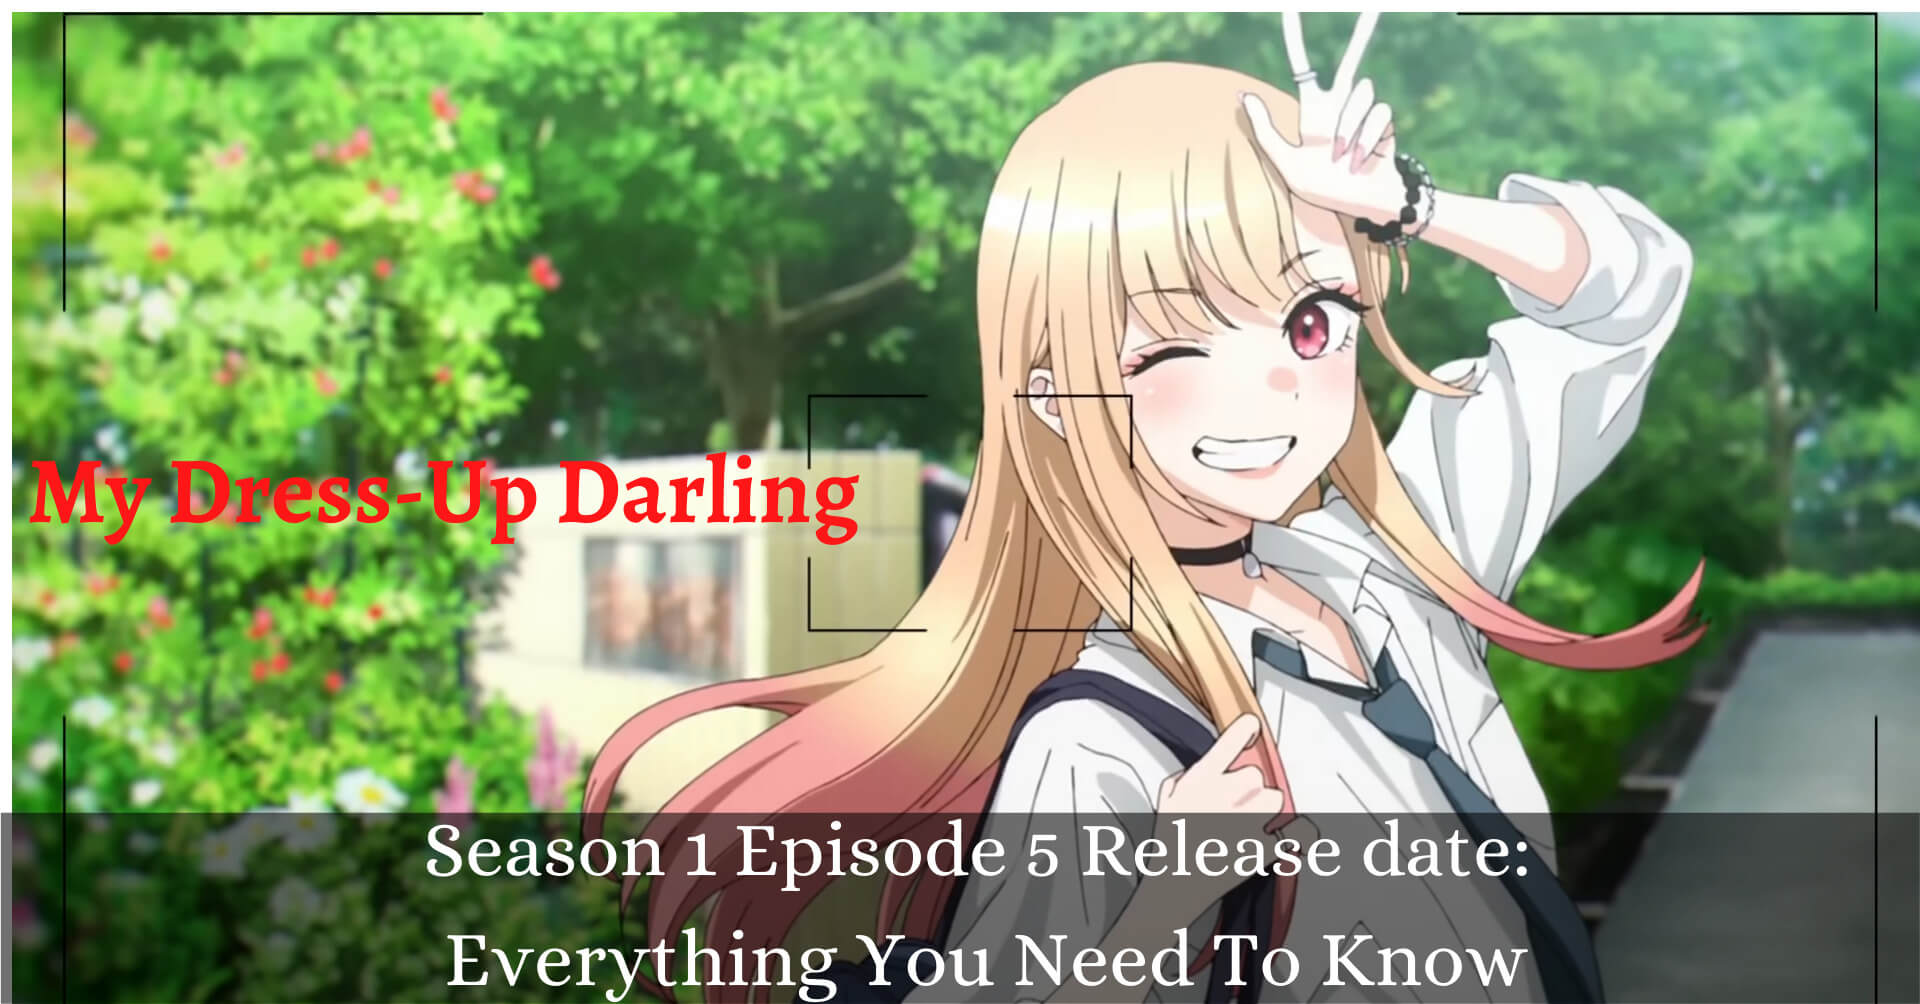 My Dress-Up Darling Season 1 Episode 5 Release date